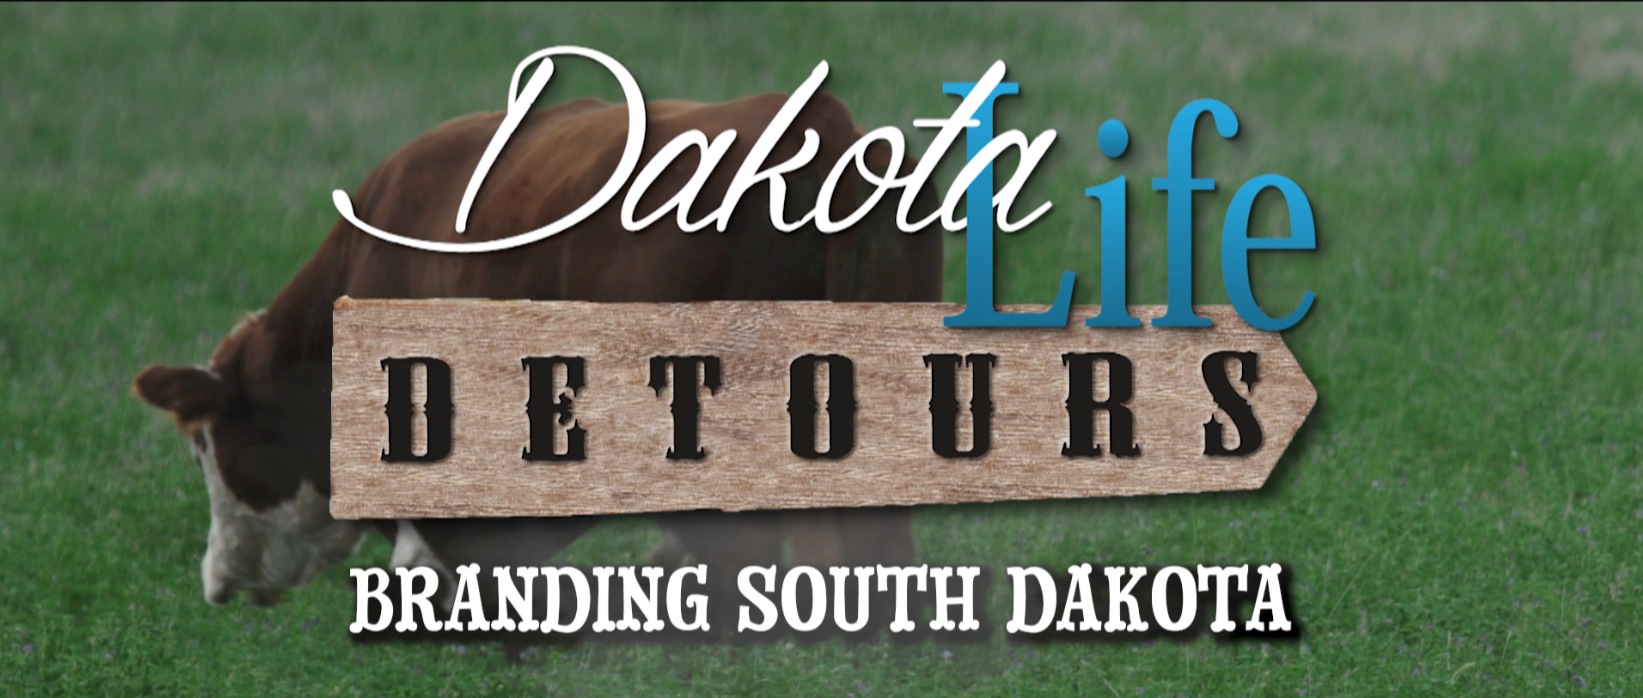 Dakota Life Detours Branding South Dakota